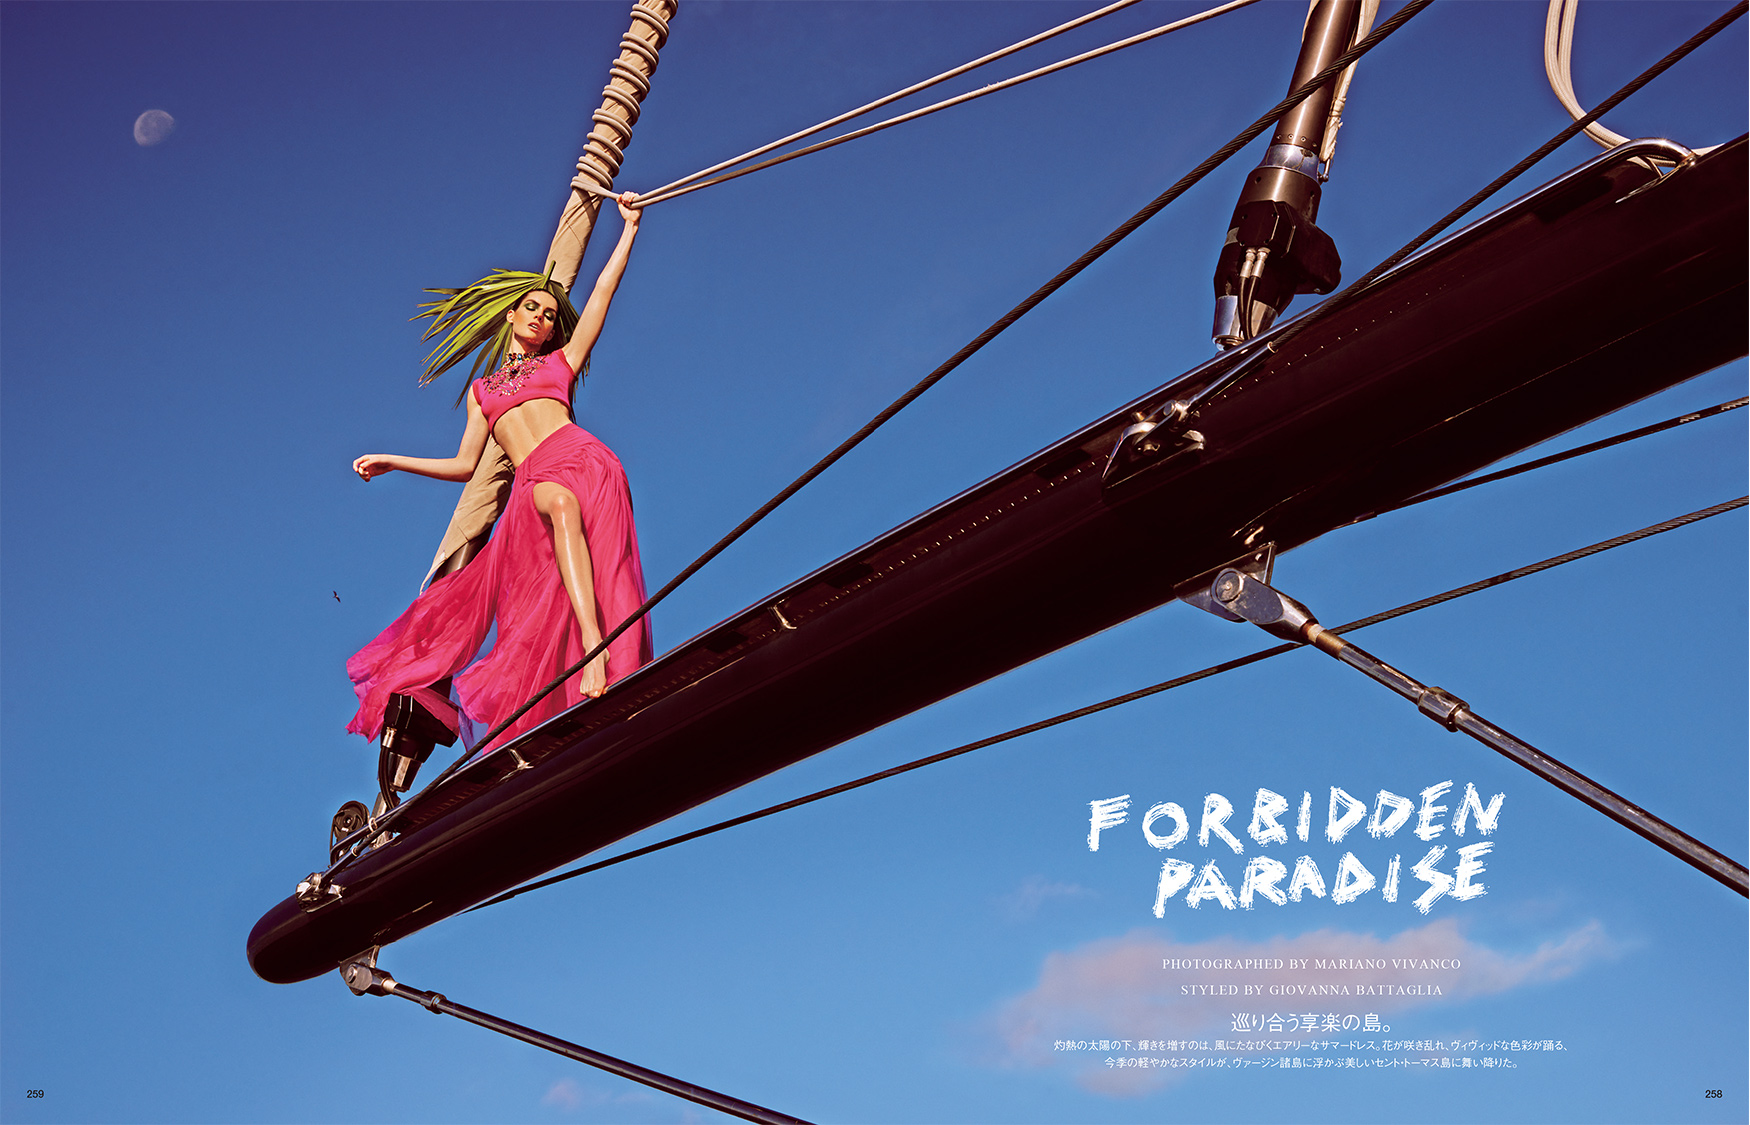 Giovanna-Battaglia-Vogue-Japan-Mariano-Vivanco-Forbidden-Paradise-1.jpg